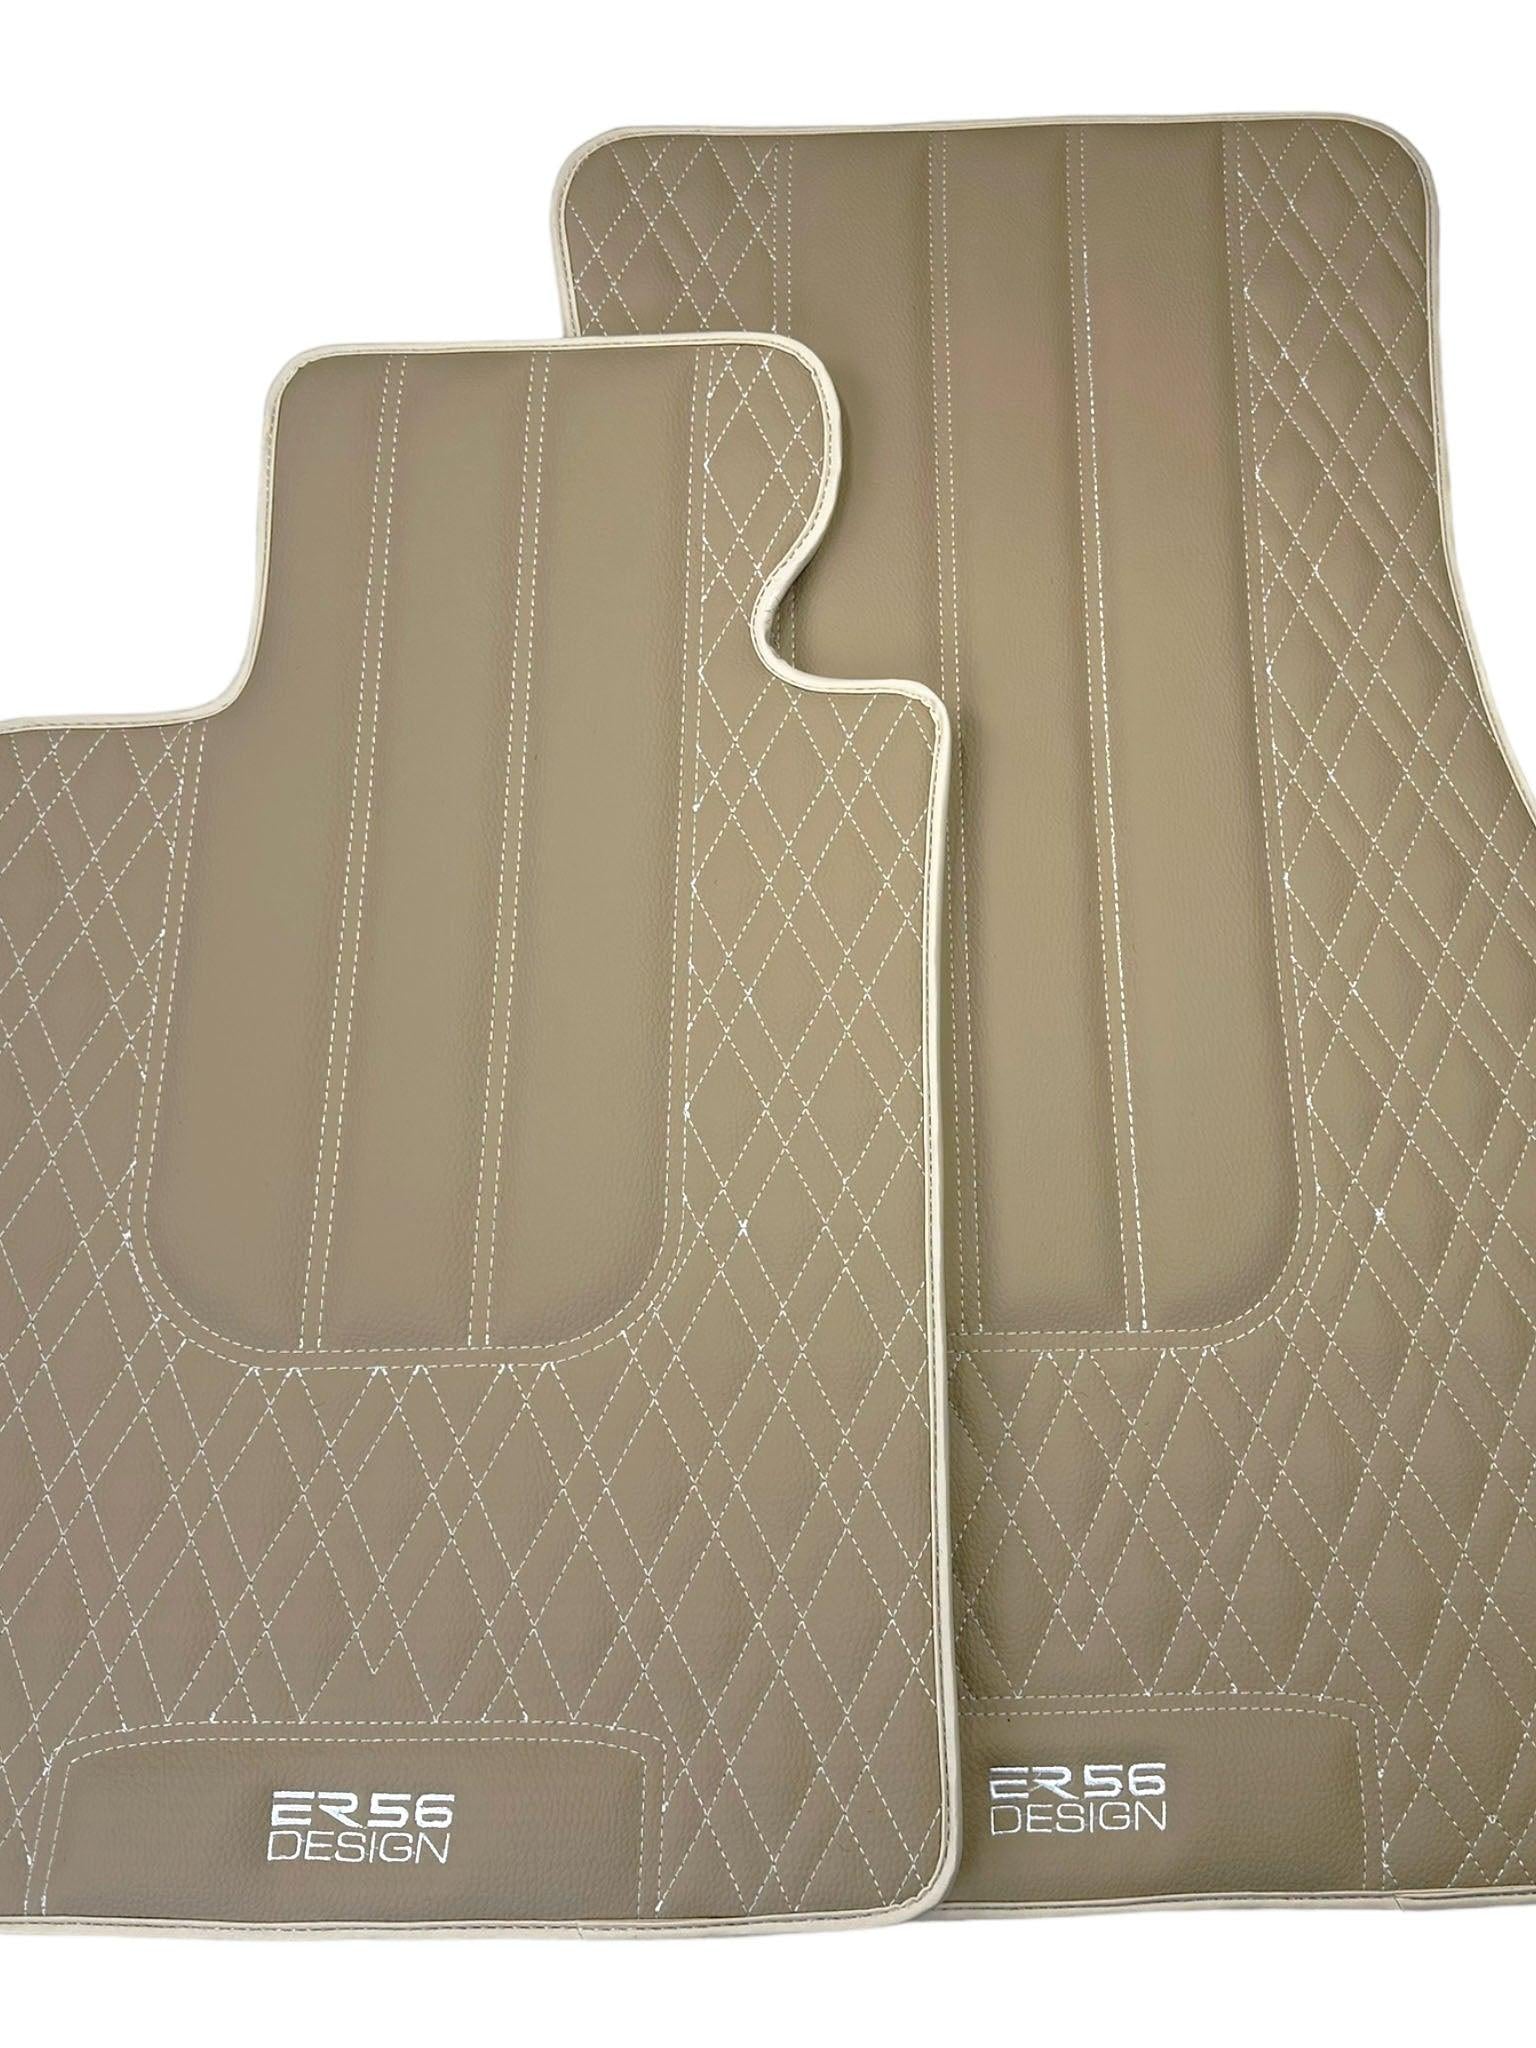 Beige Leather Floor Floor Mats For BMW M5 Series F90 | Fighter Jet Edition AutoWin Brand |Sky Blue Trim